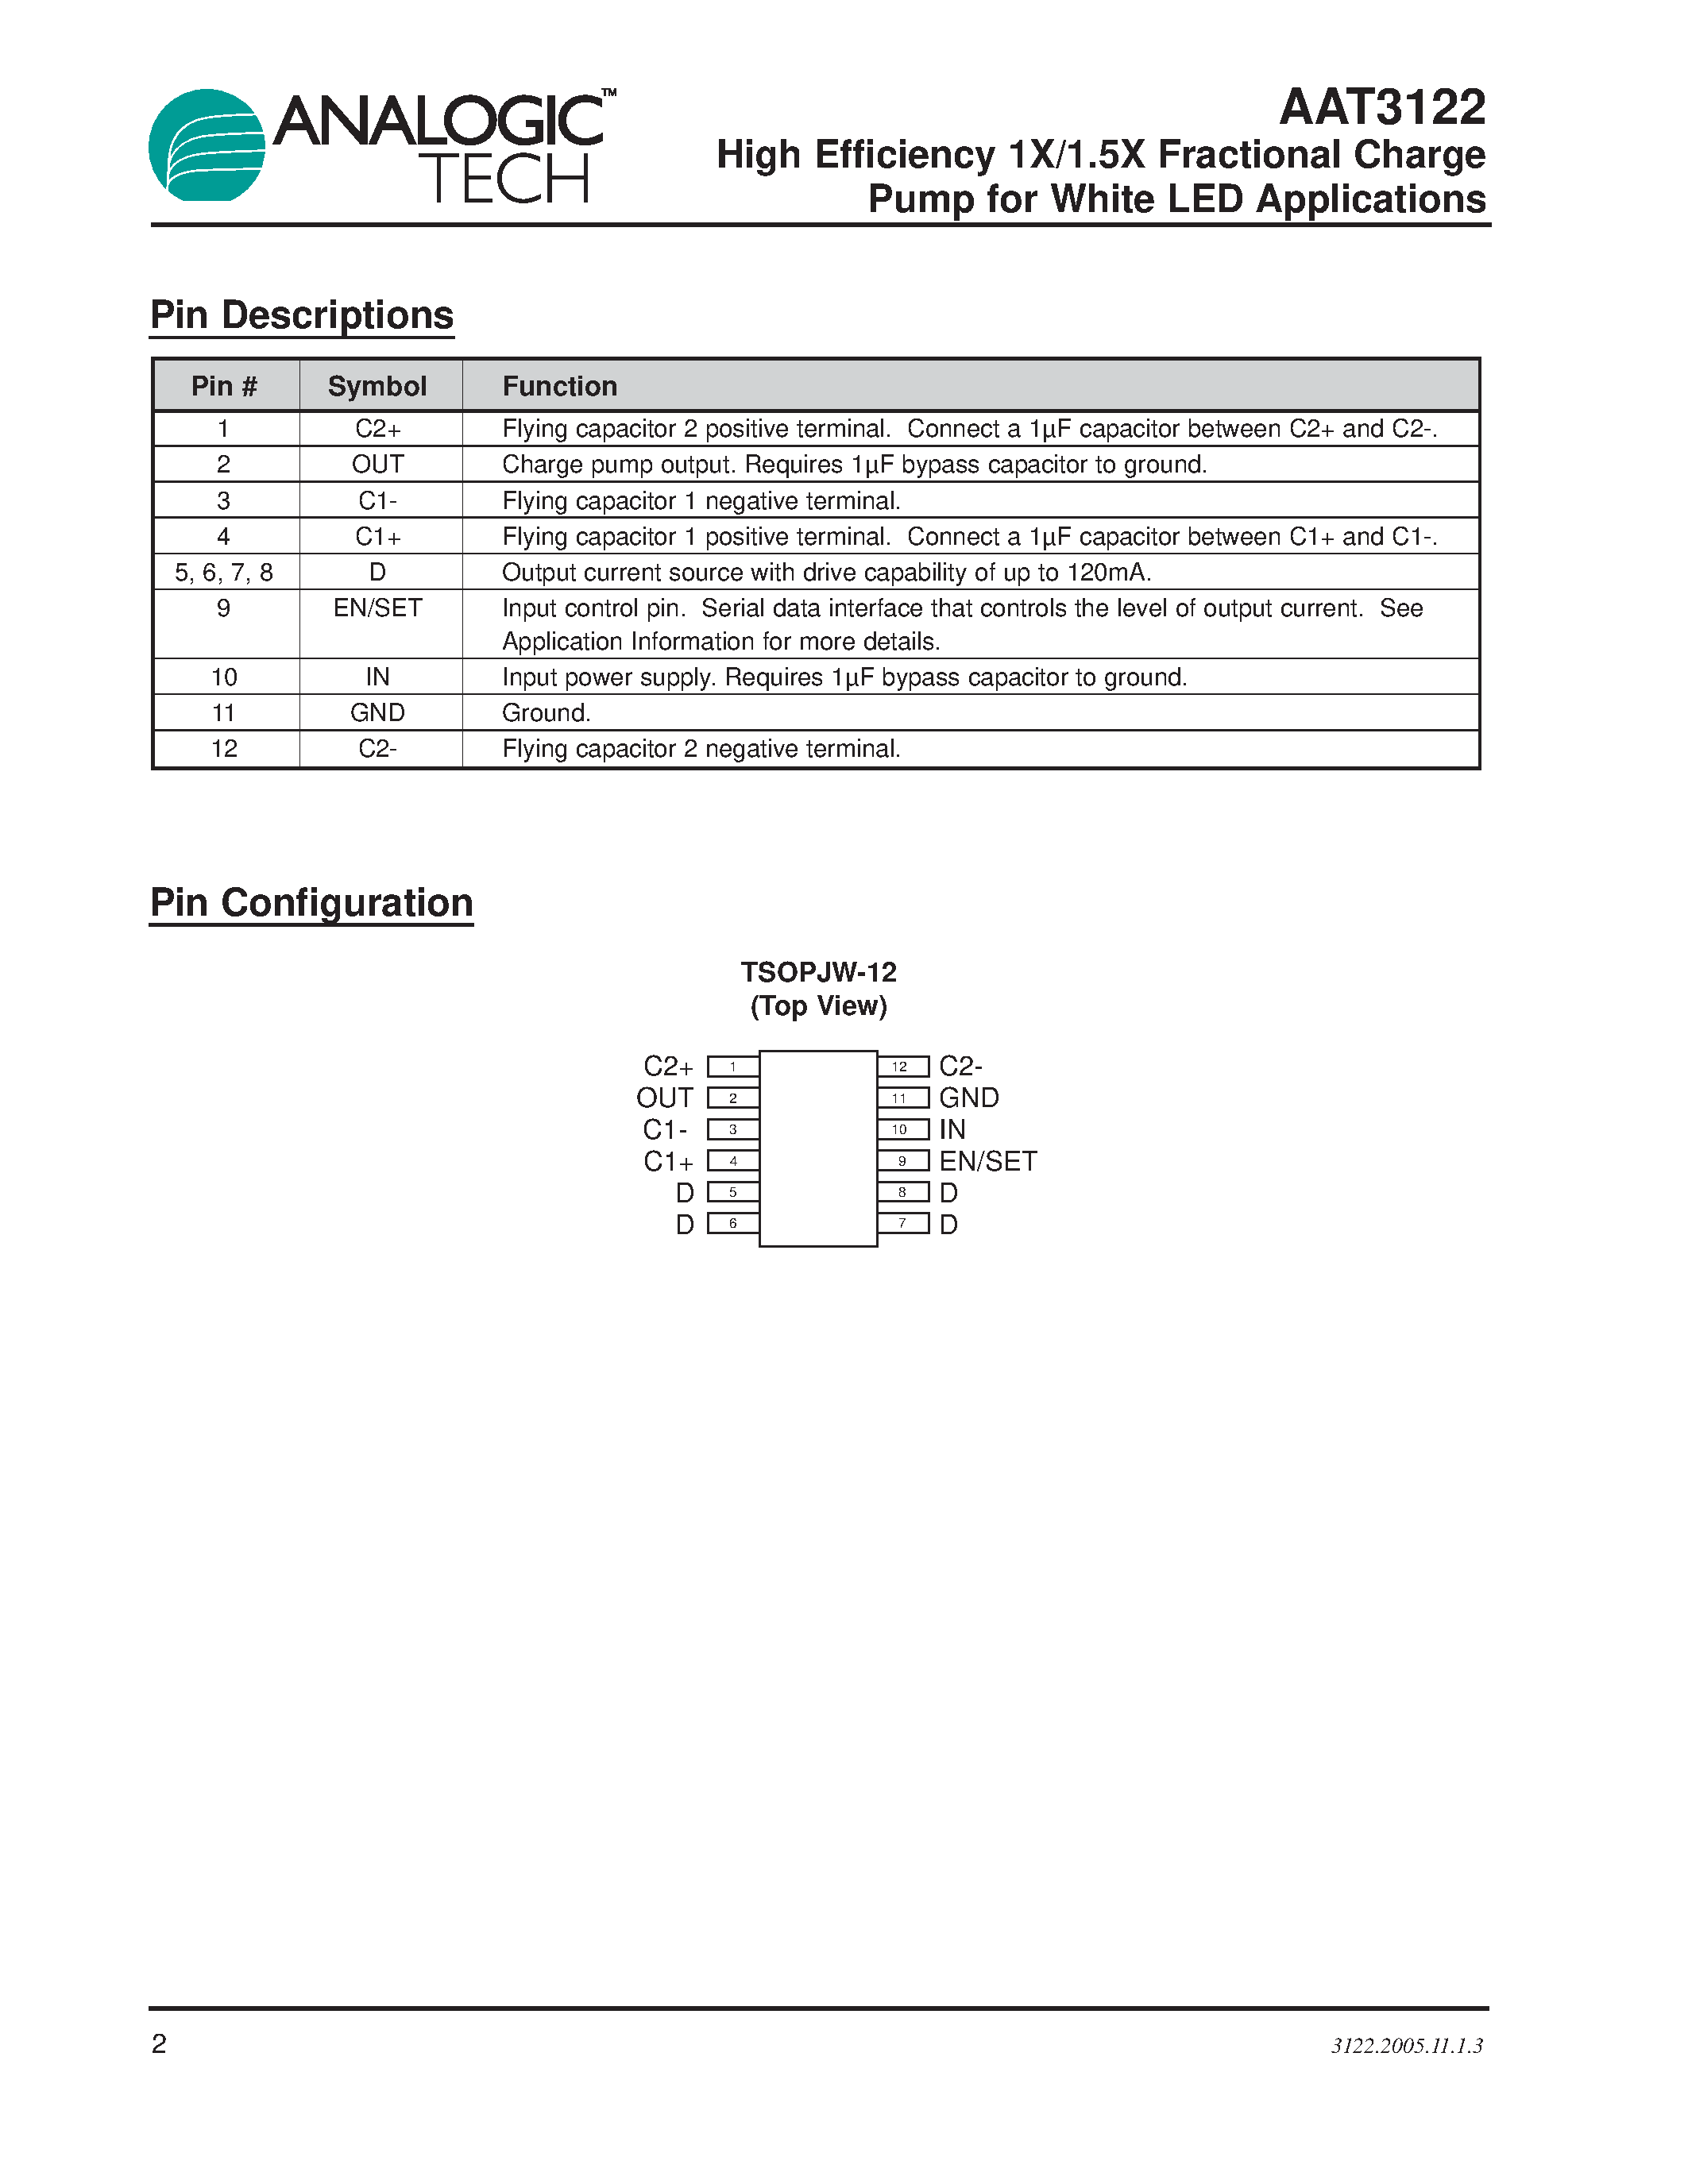 Даташит AAT3122 - High Efficiency 1X/1.5X Fractional Charge Pump страница 2